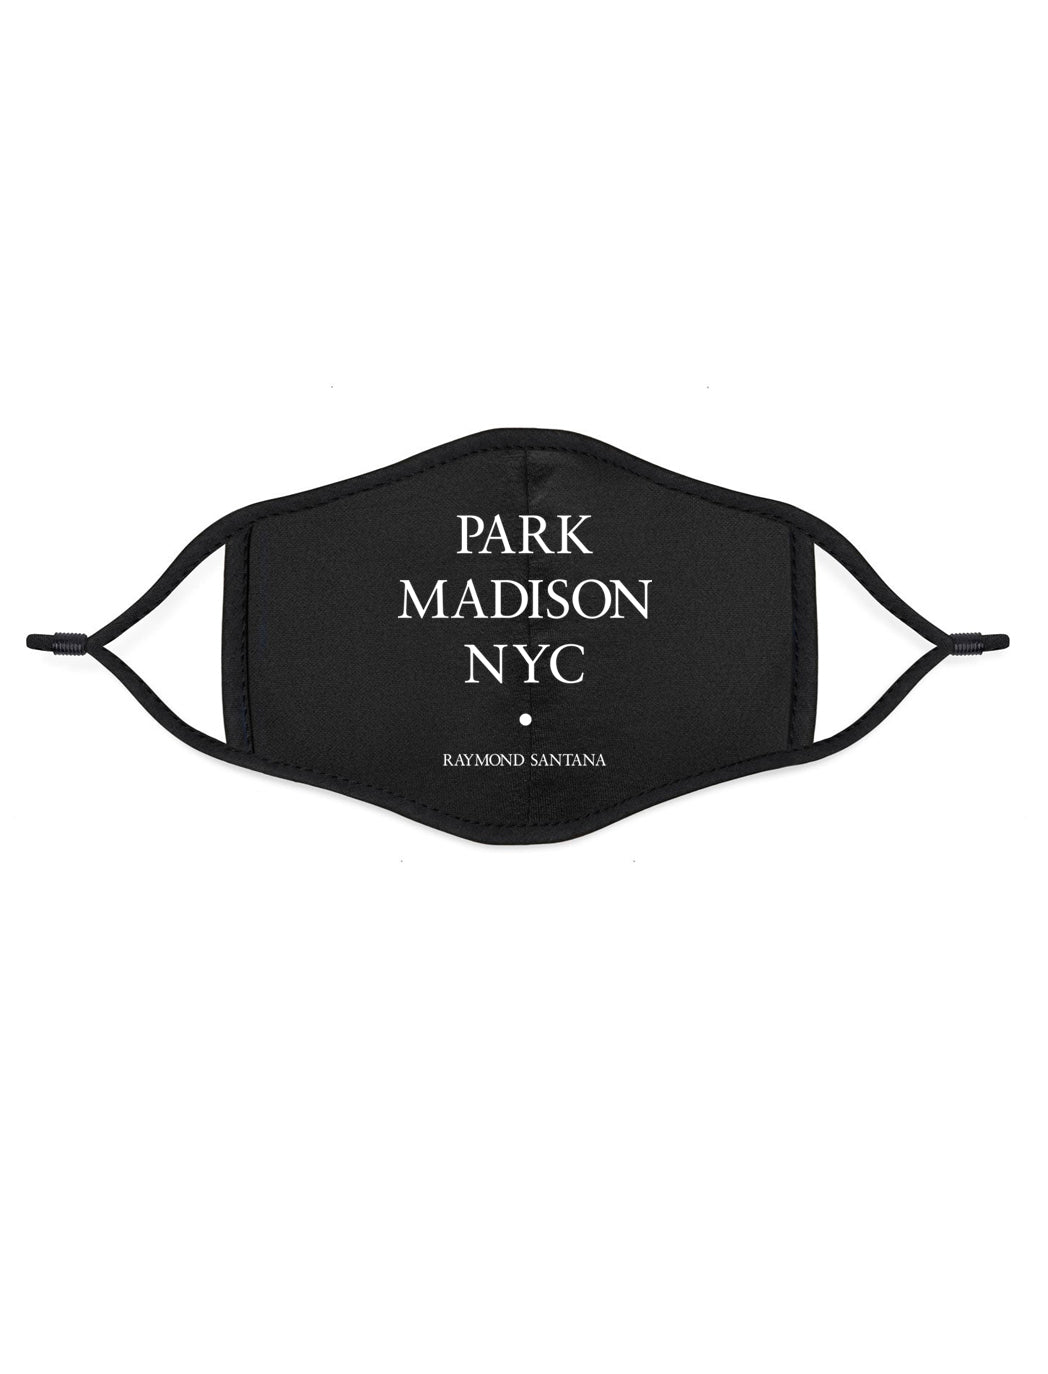 PARK MADISON NYC SNAPBACK